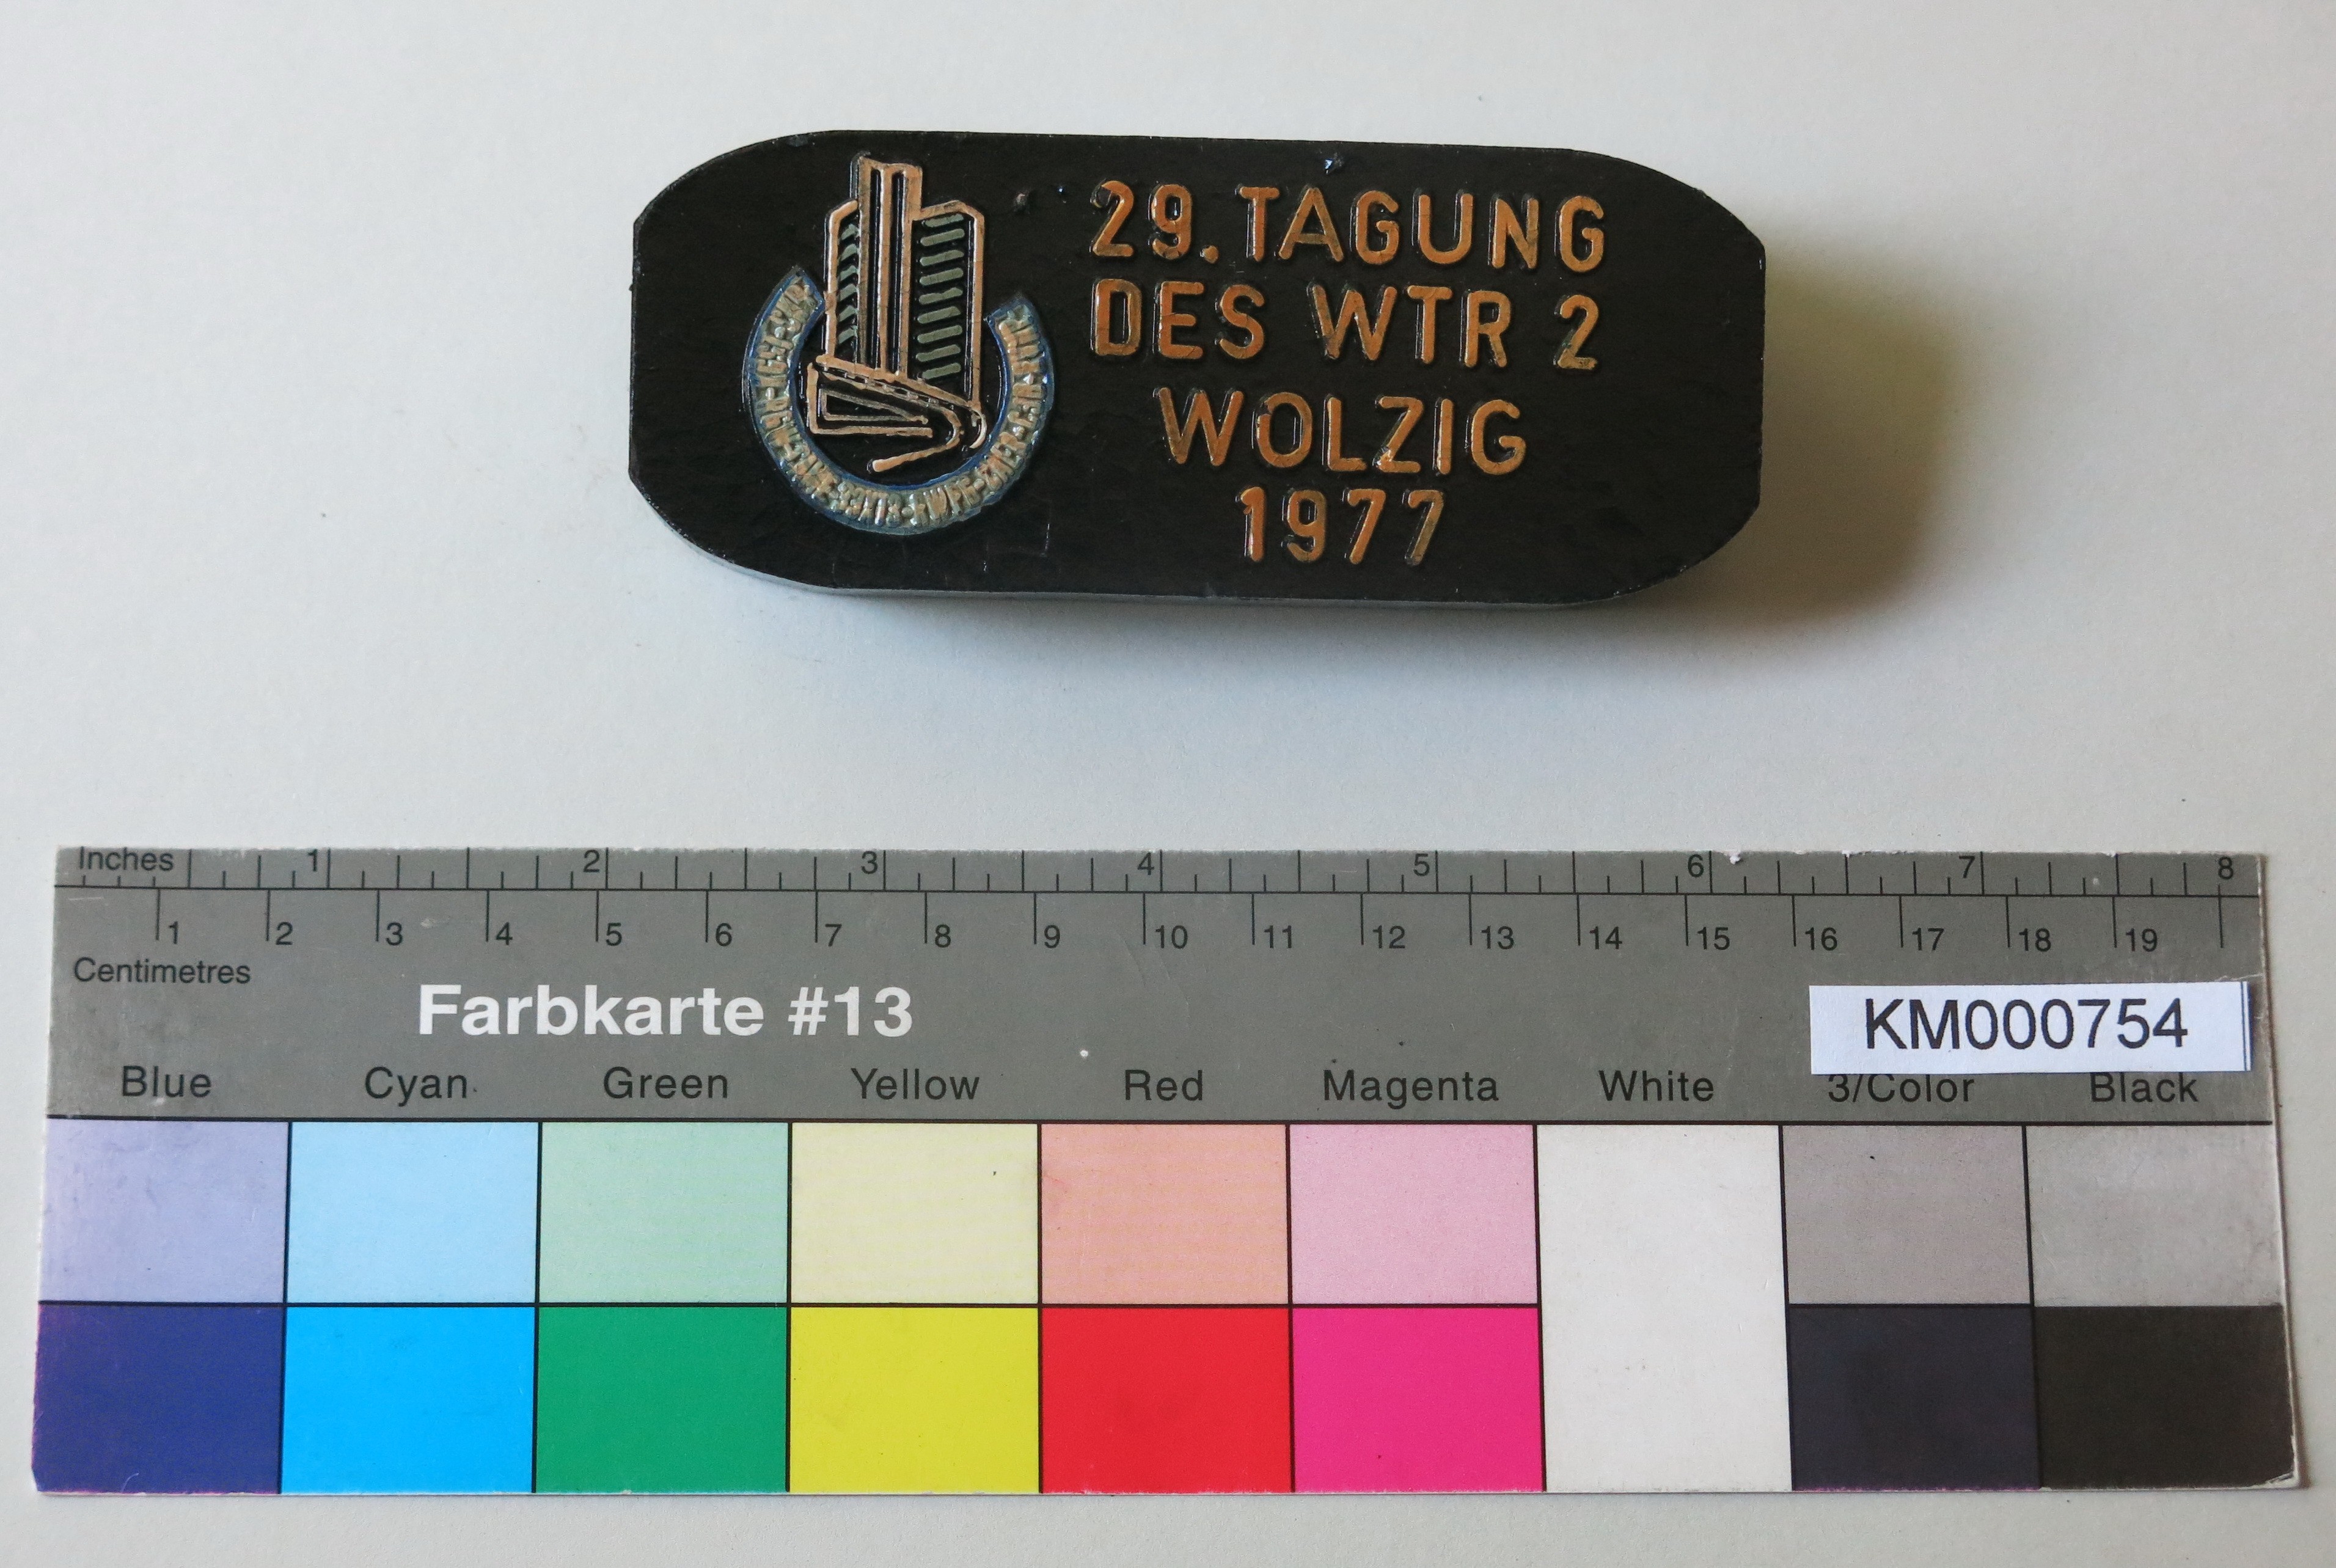 Zierbrikett "29. TAGUNG DES WTR 2 WOLZIG 1977" (Energiefabrik Knappenrode CC BY-SA)